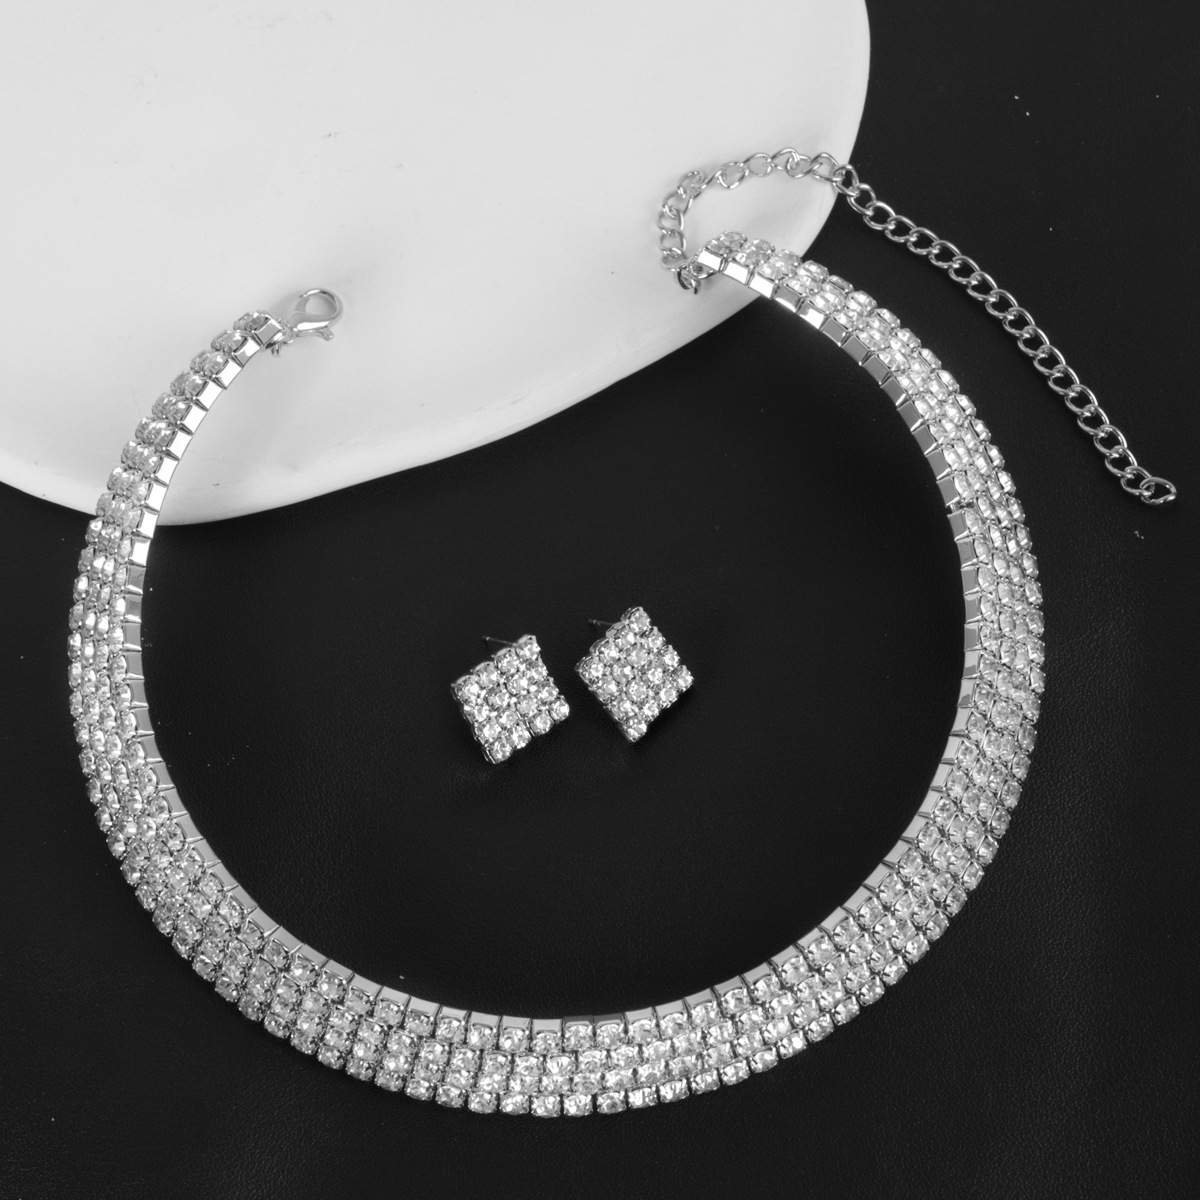 Conjuntos de joias de casamento, cristal de noiva, strass, pulseira, brincos e colar, conjuntos de joias coreanas para mulheres, moda, meninas, presente de joias CL2938